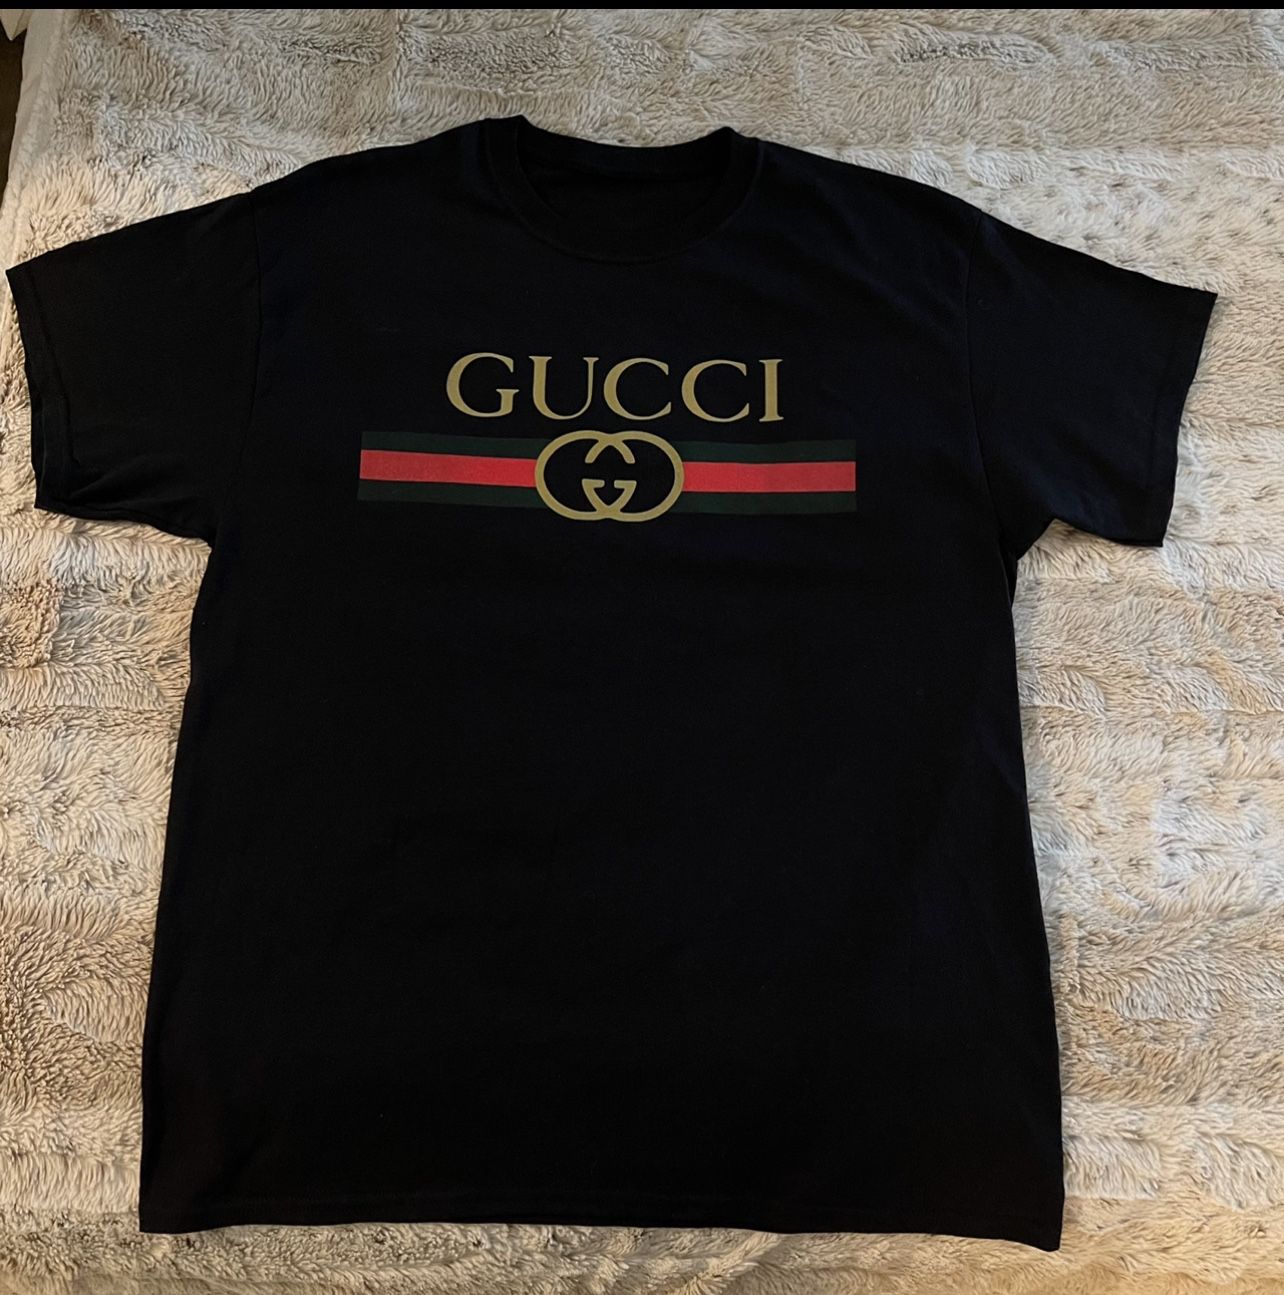 Gucci Shirt - Medium